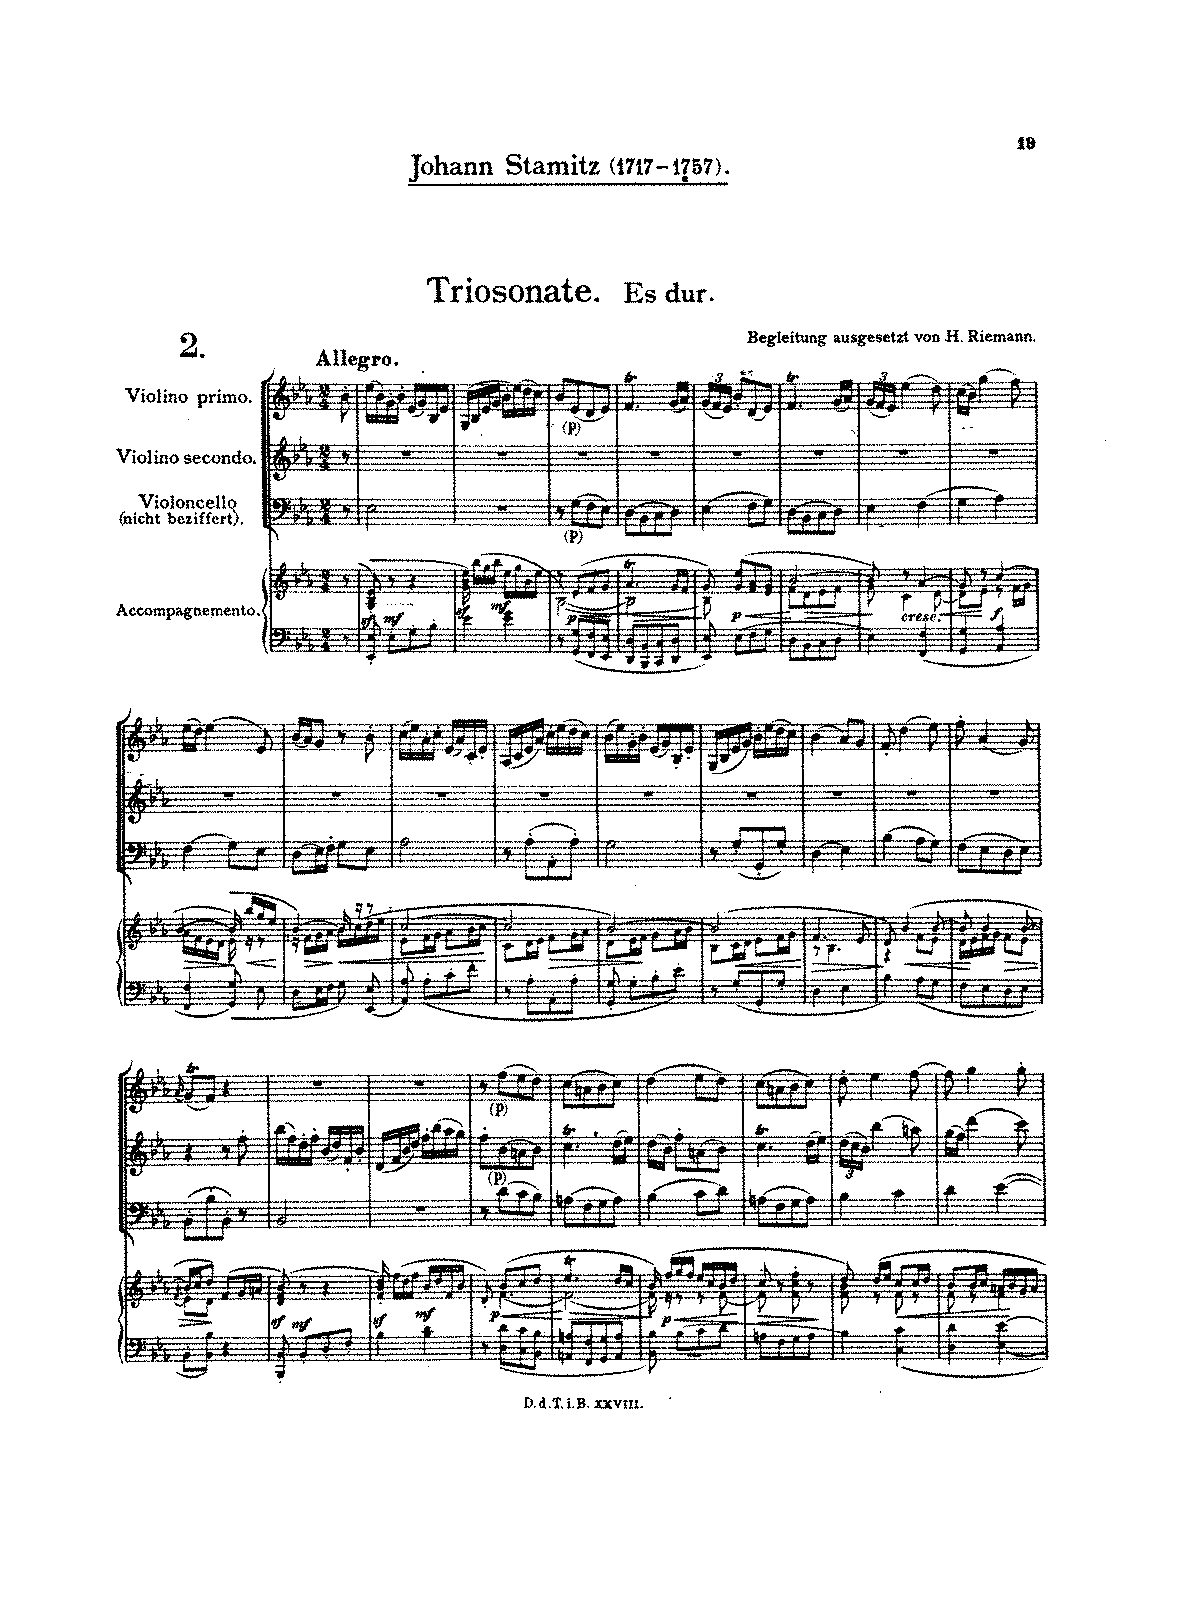 brahms e flat major viola sonata imslp